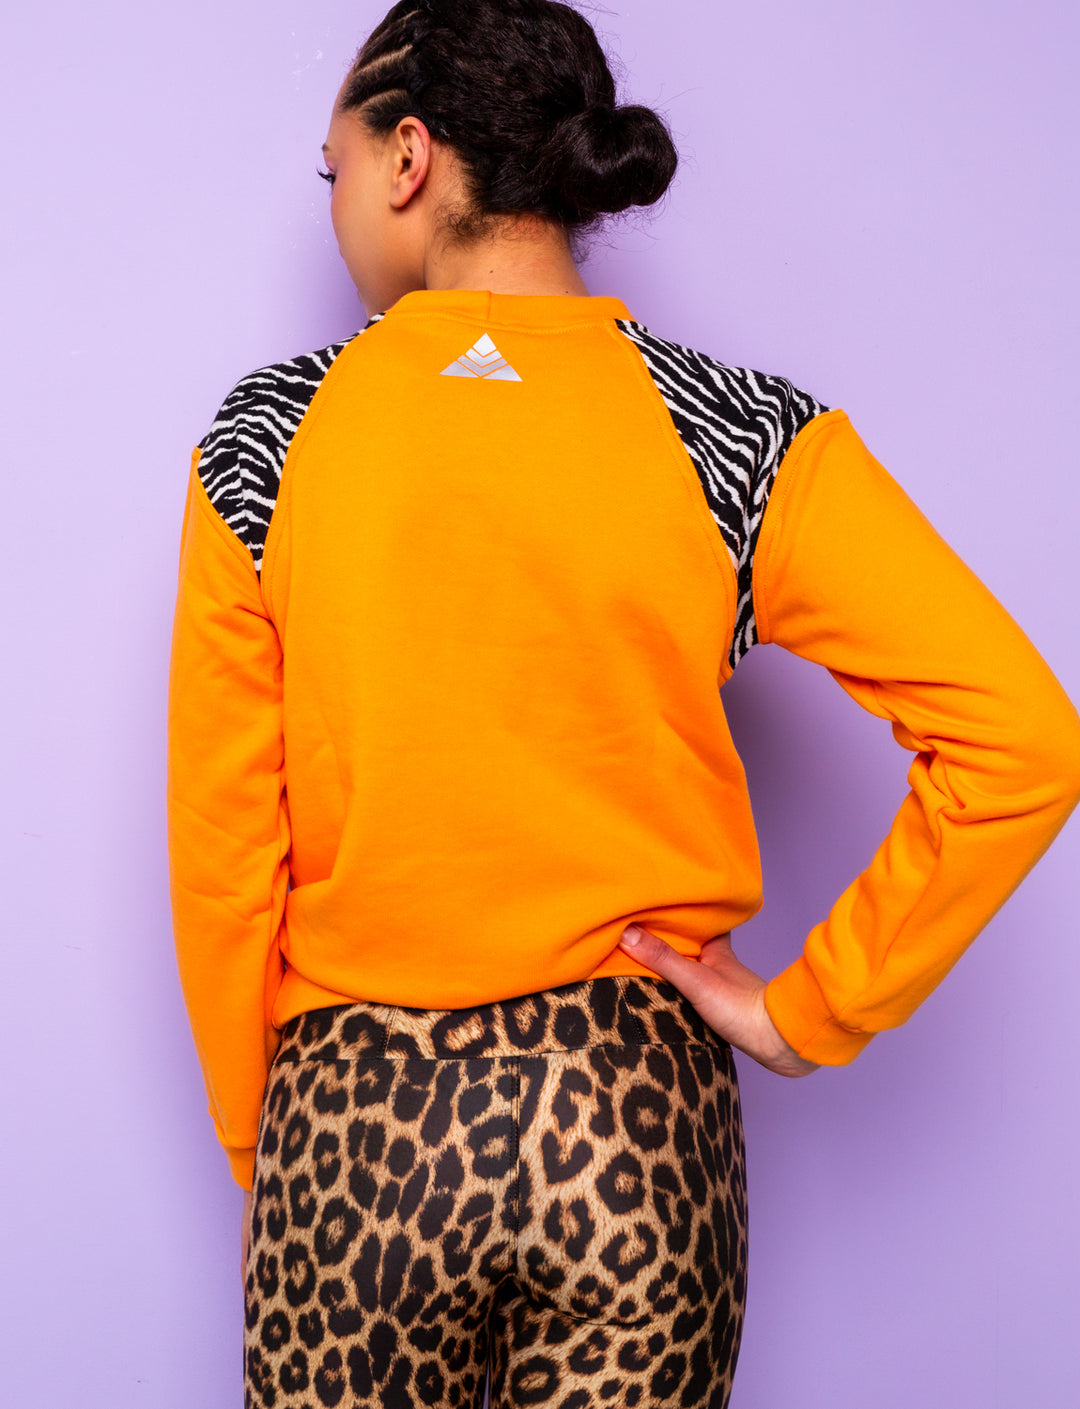 back of woman wearing orange sweatshirt with zebra print shoulders and leopard print leggings